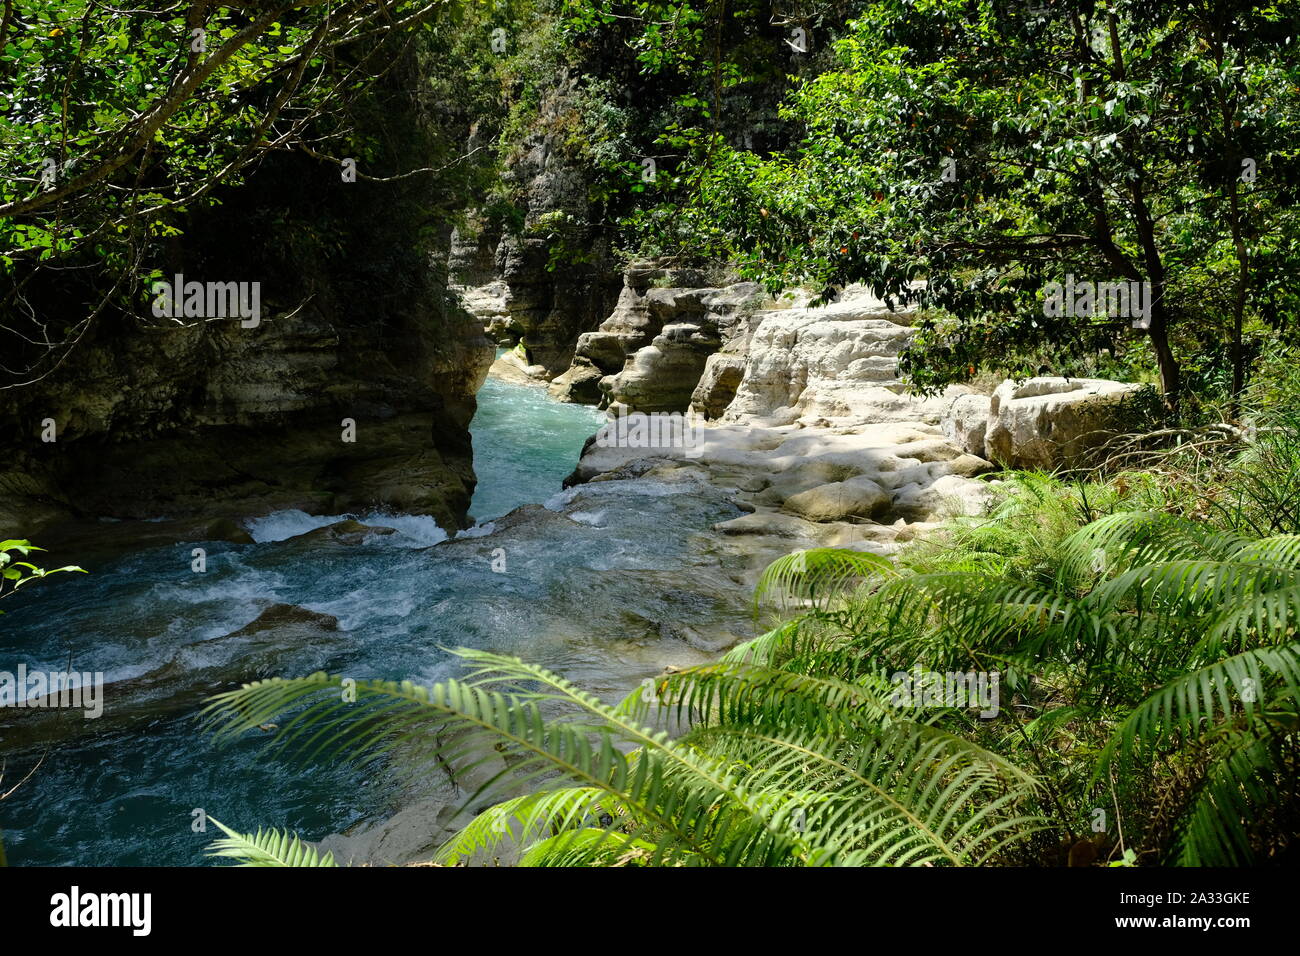 Indonesia Sumba Island Tanggedu Waterfall Luku Mondu river bed Stock Photo